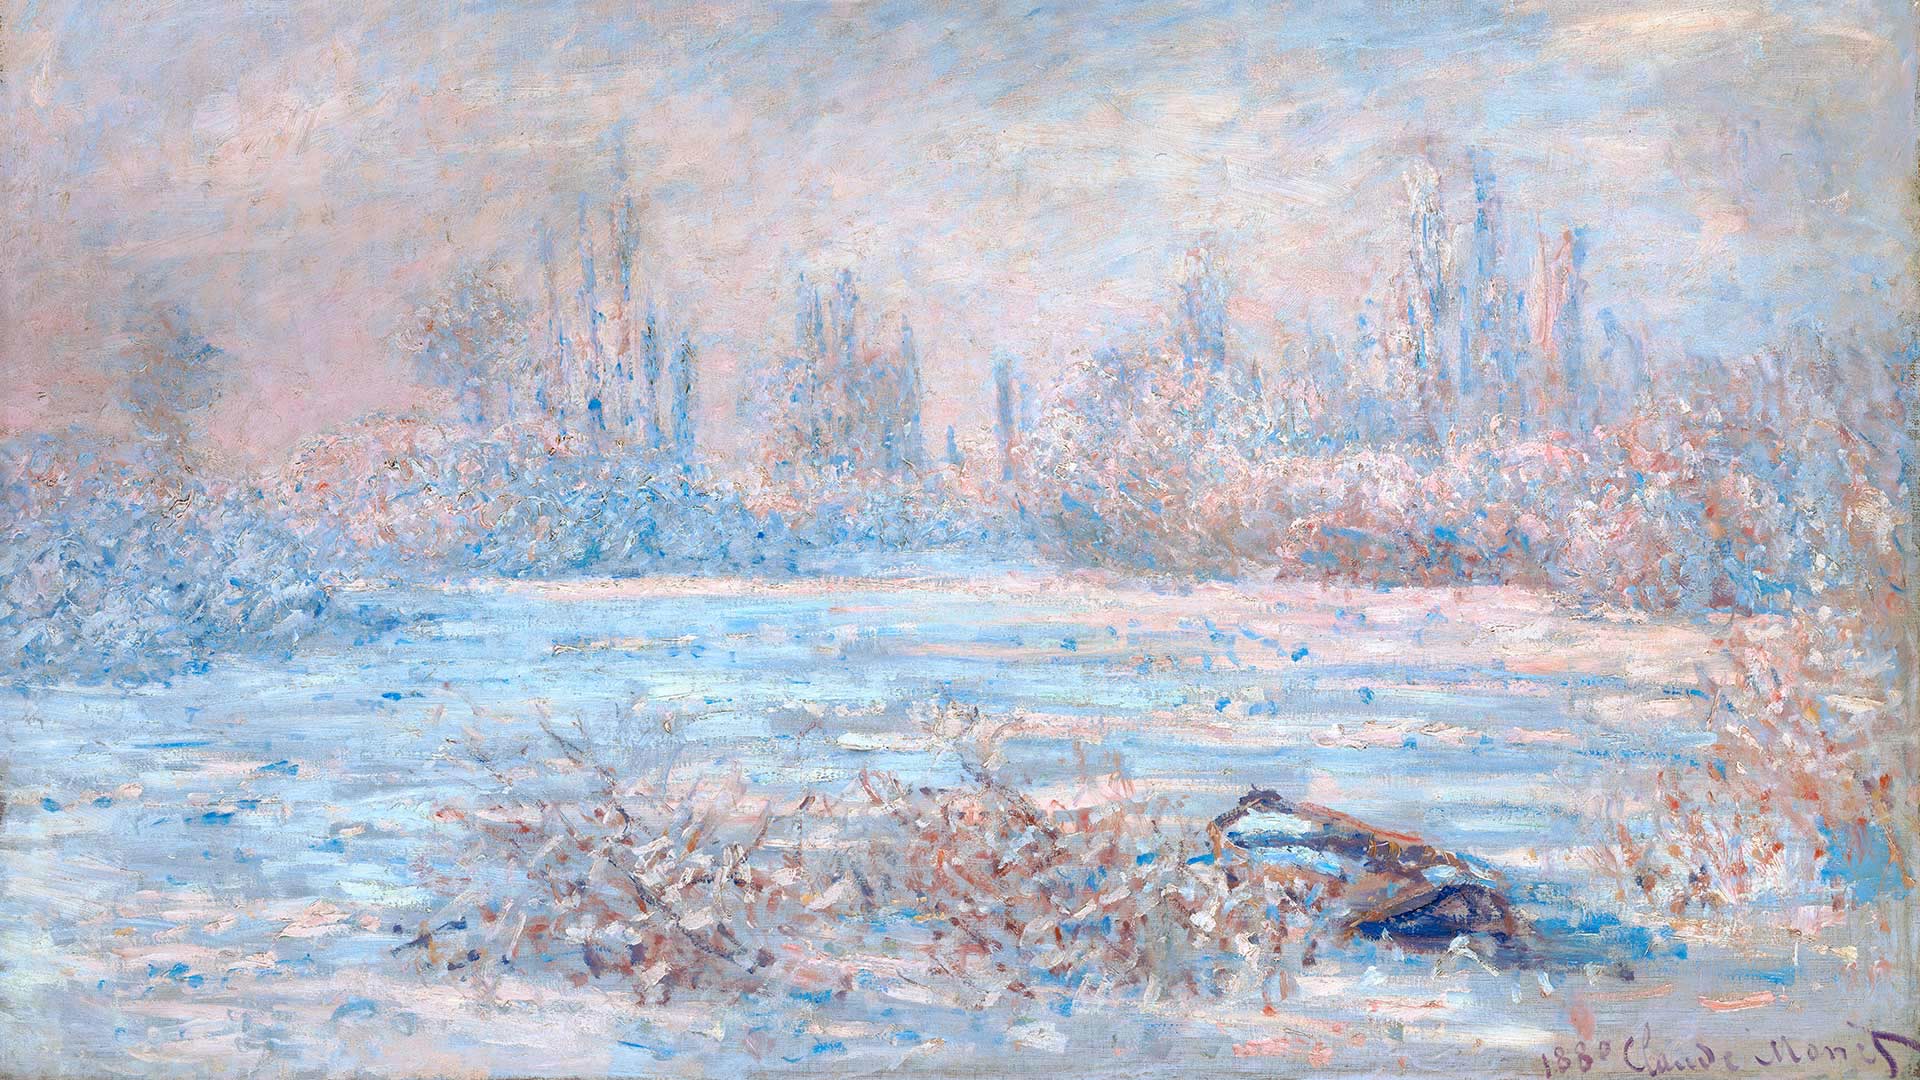 Monet still makes an impression